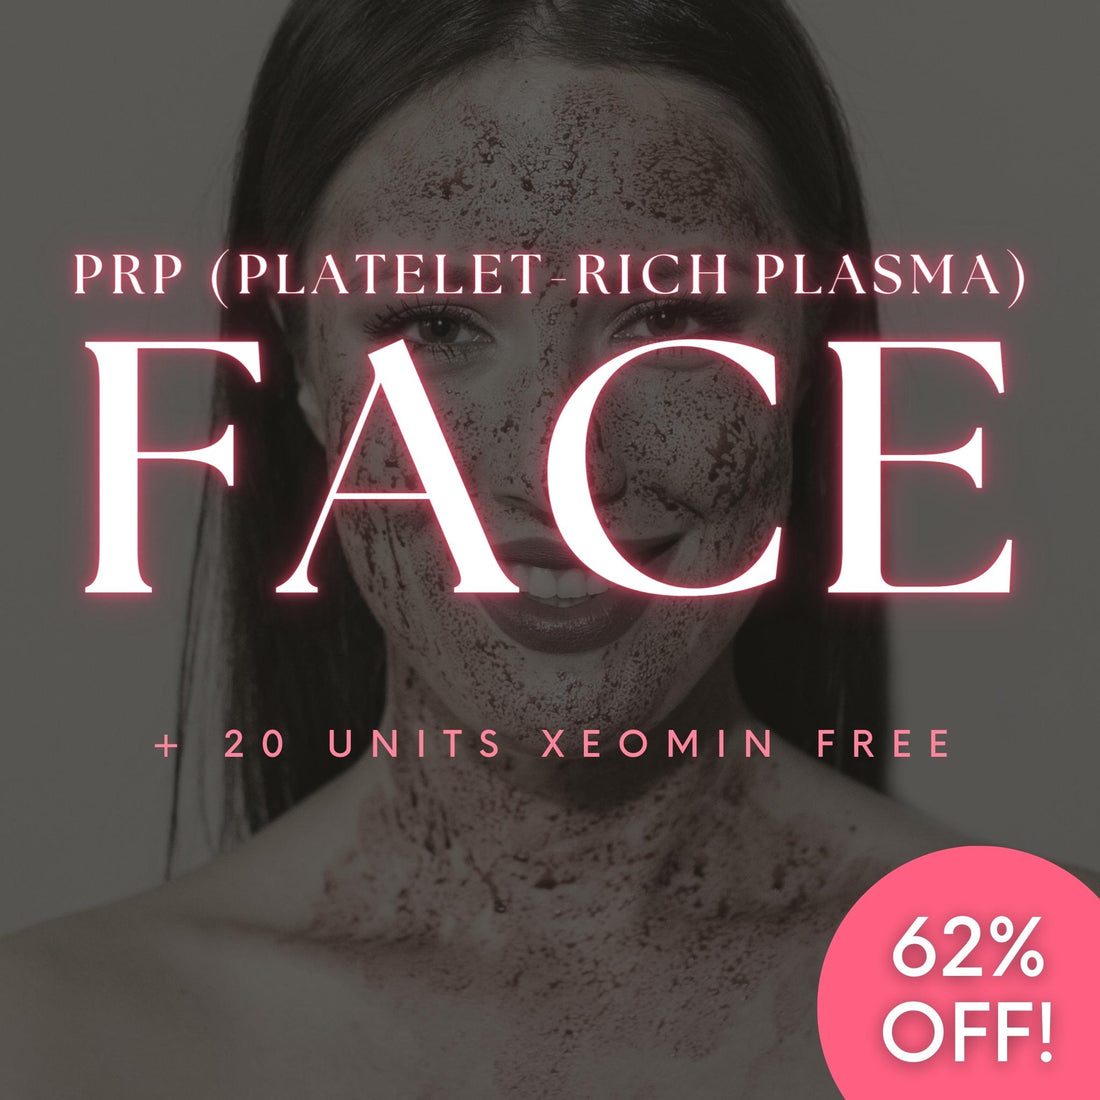 PRP (Platelet-Rich Plasma) Face + 20 Units Xeomin FREE